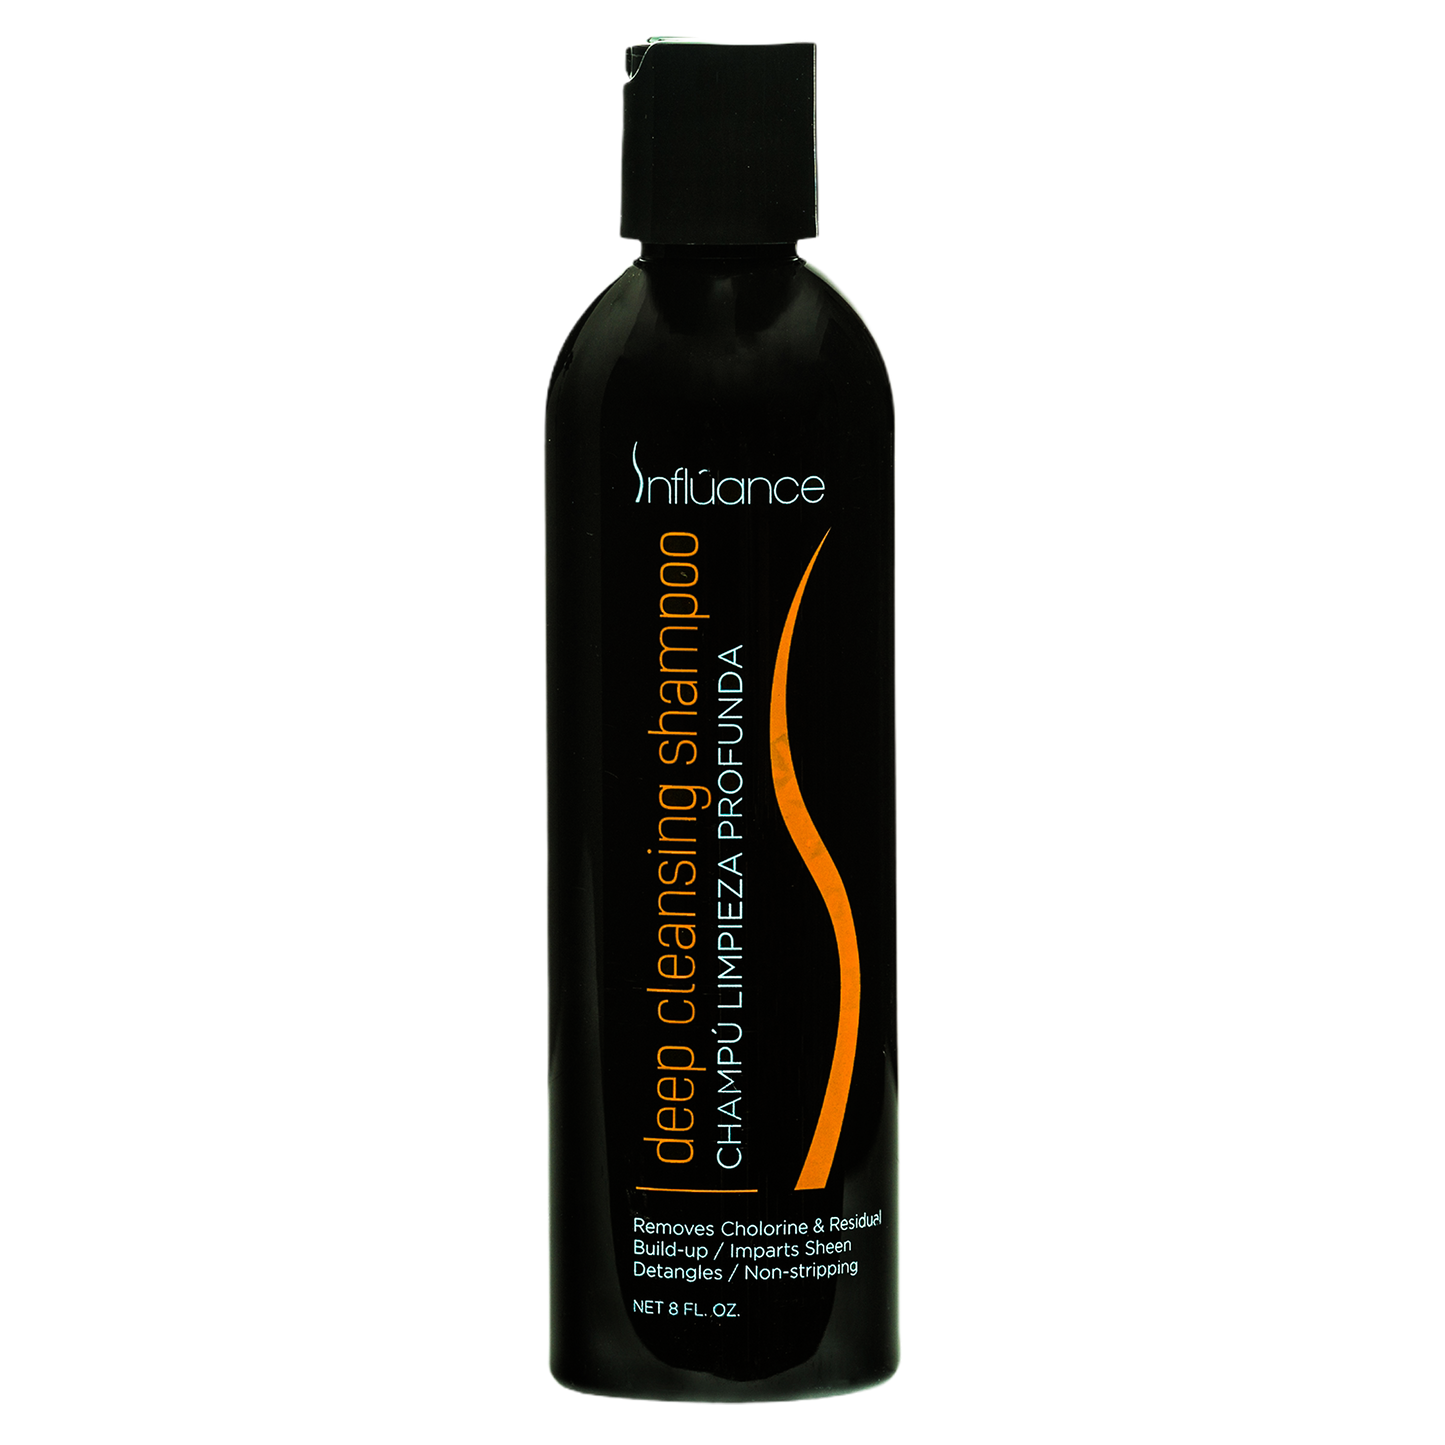 Influance Deep Cleansing Clarifying Shampoo